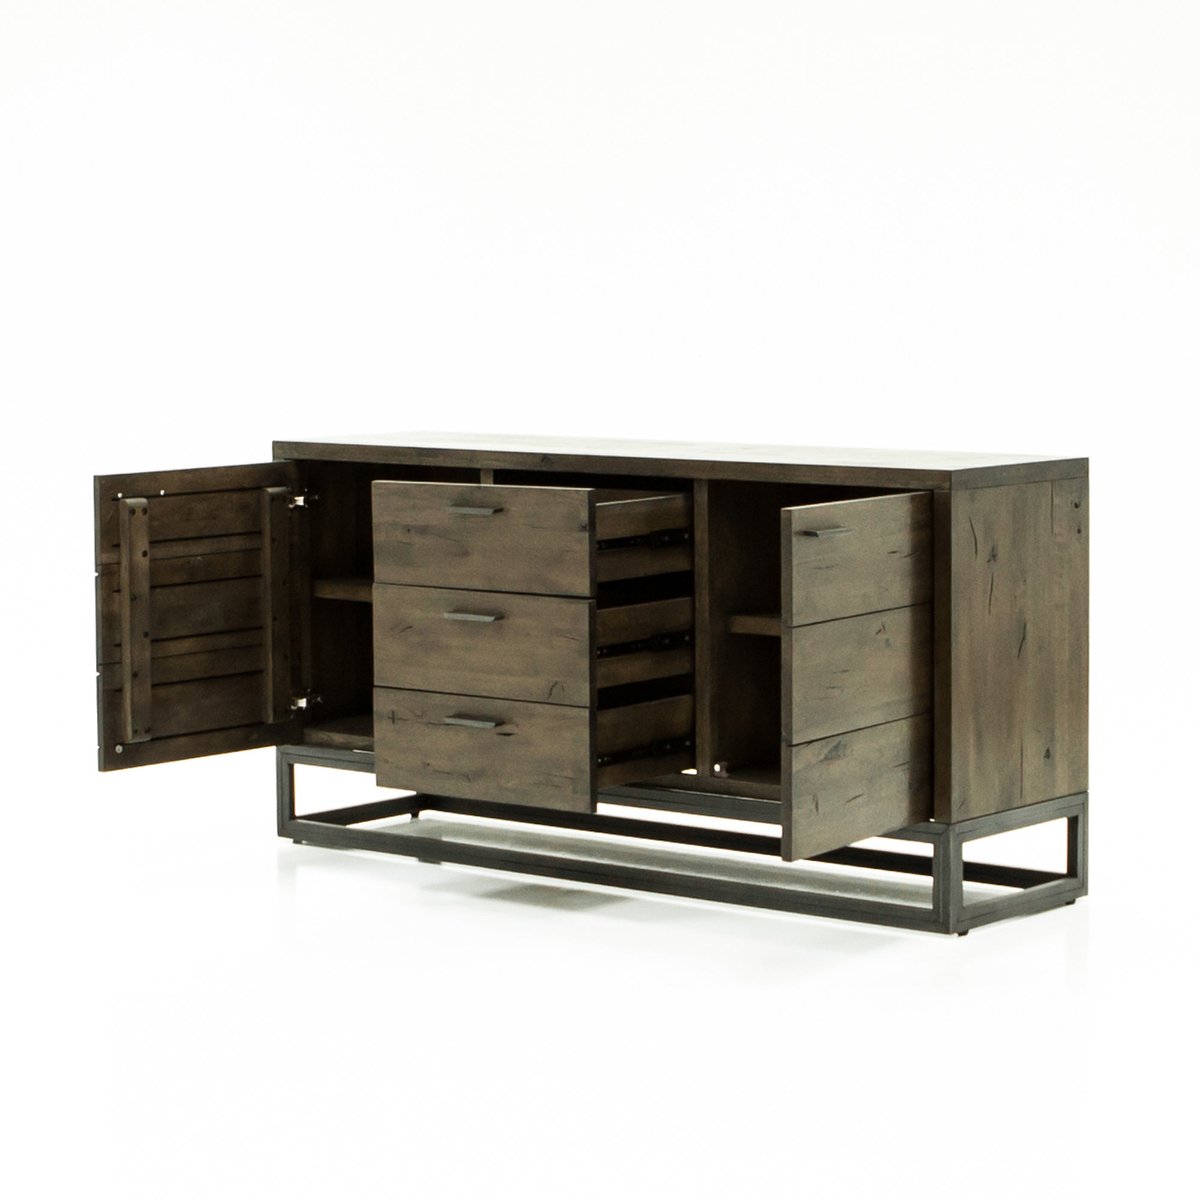 Буфет Downey Sideboard DK modern furniture